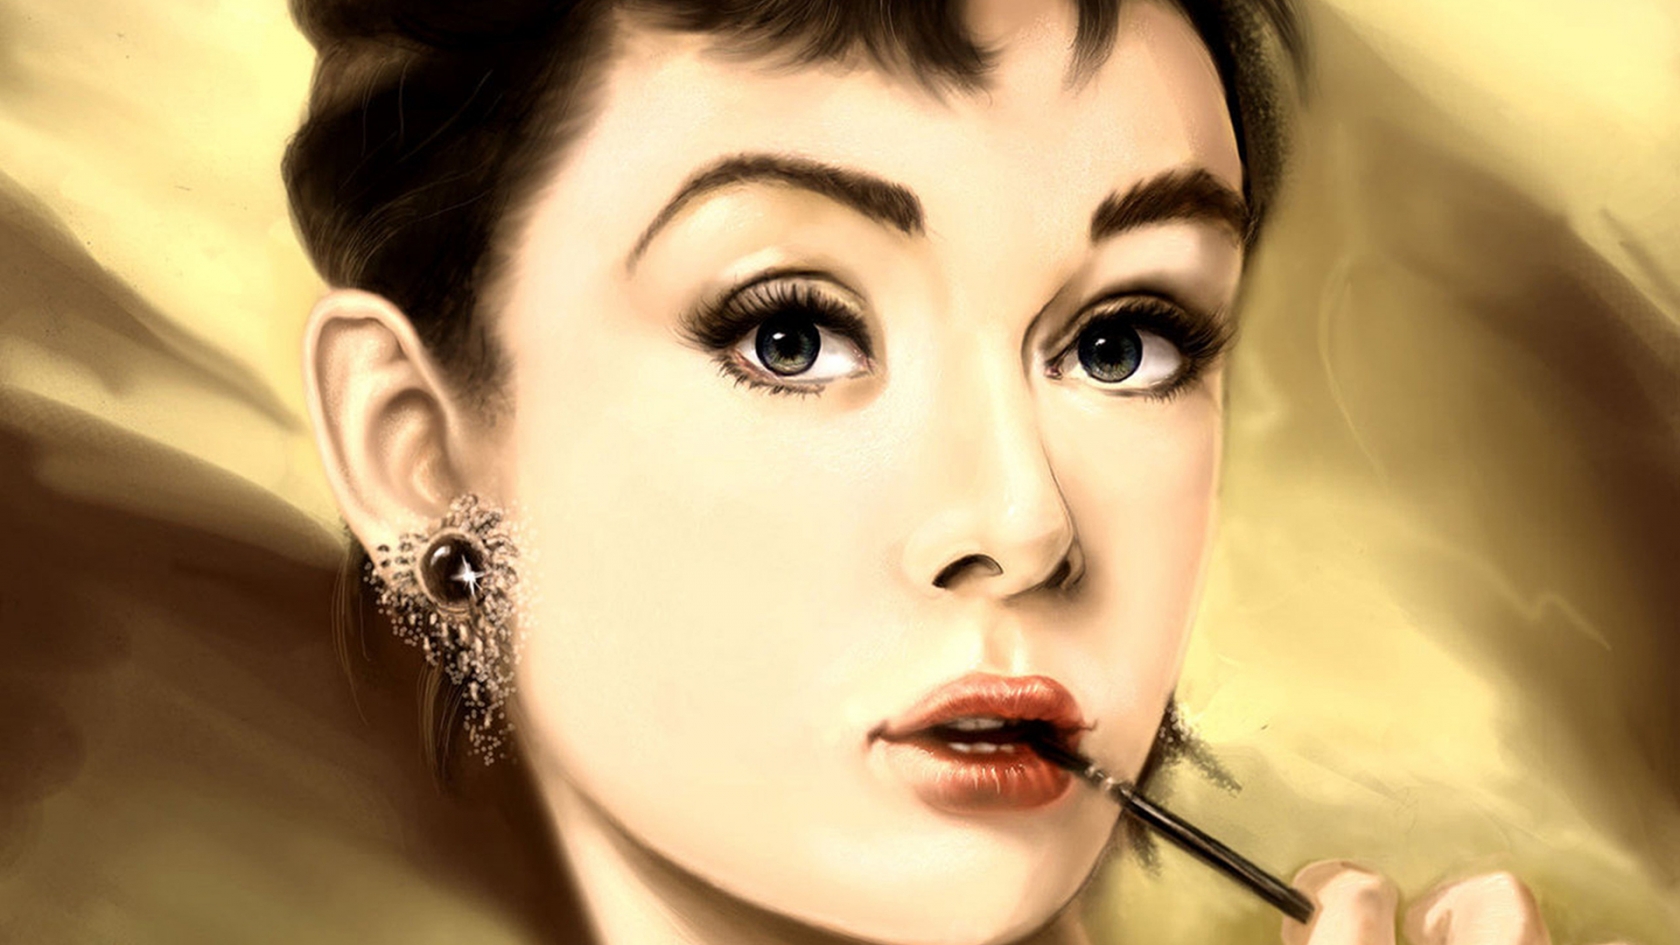 Audrey Hepburn Portrait Painting for 1680 x 945 HDTV resolution